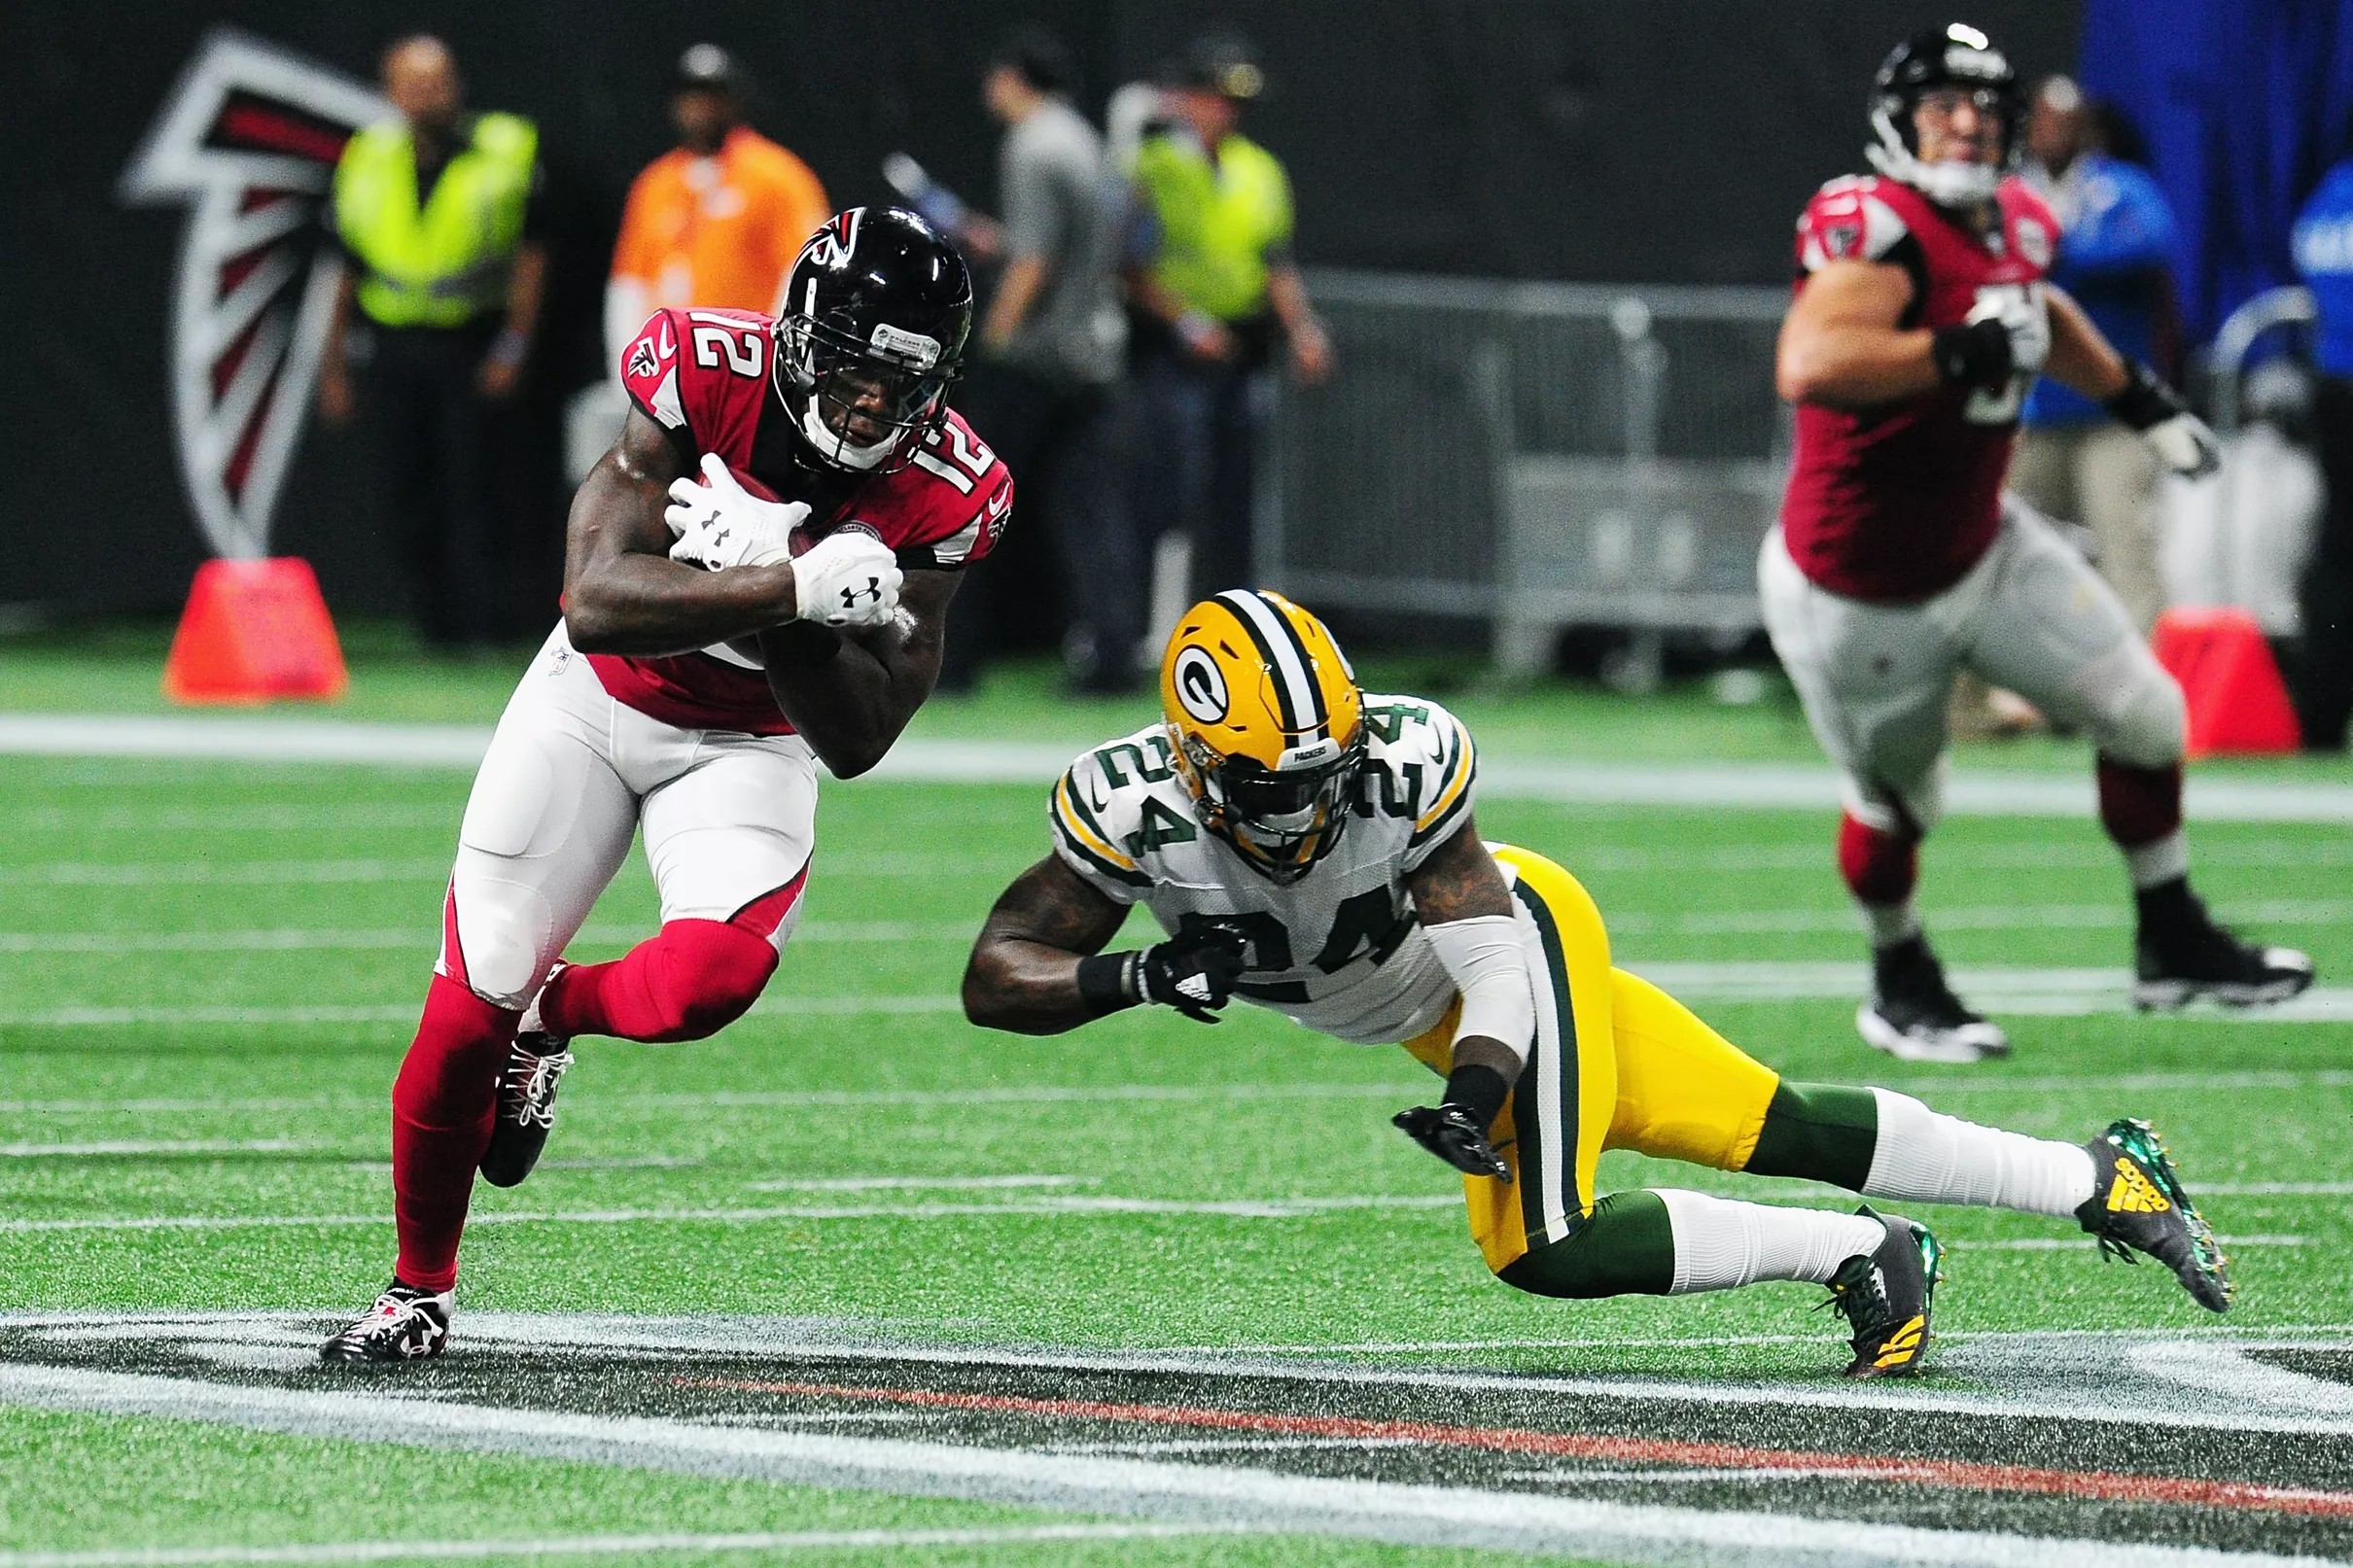 Falcons vs. Packers recap Injuries plague both teams, but Atlanta wins big